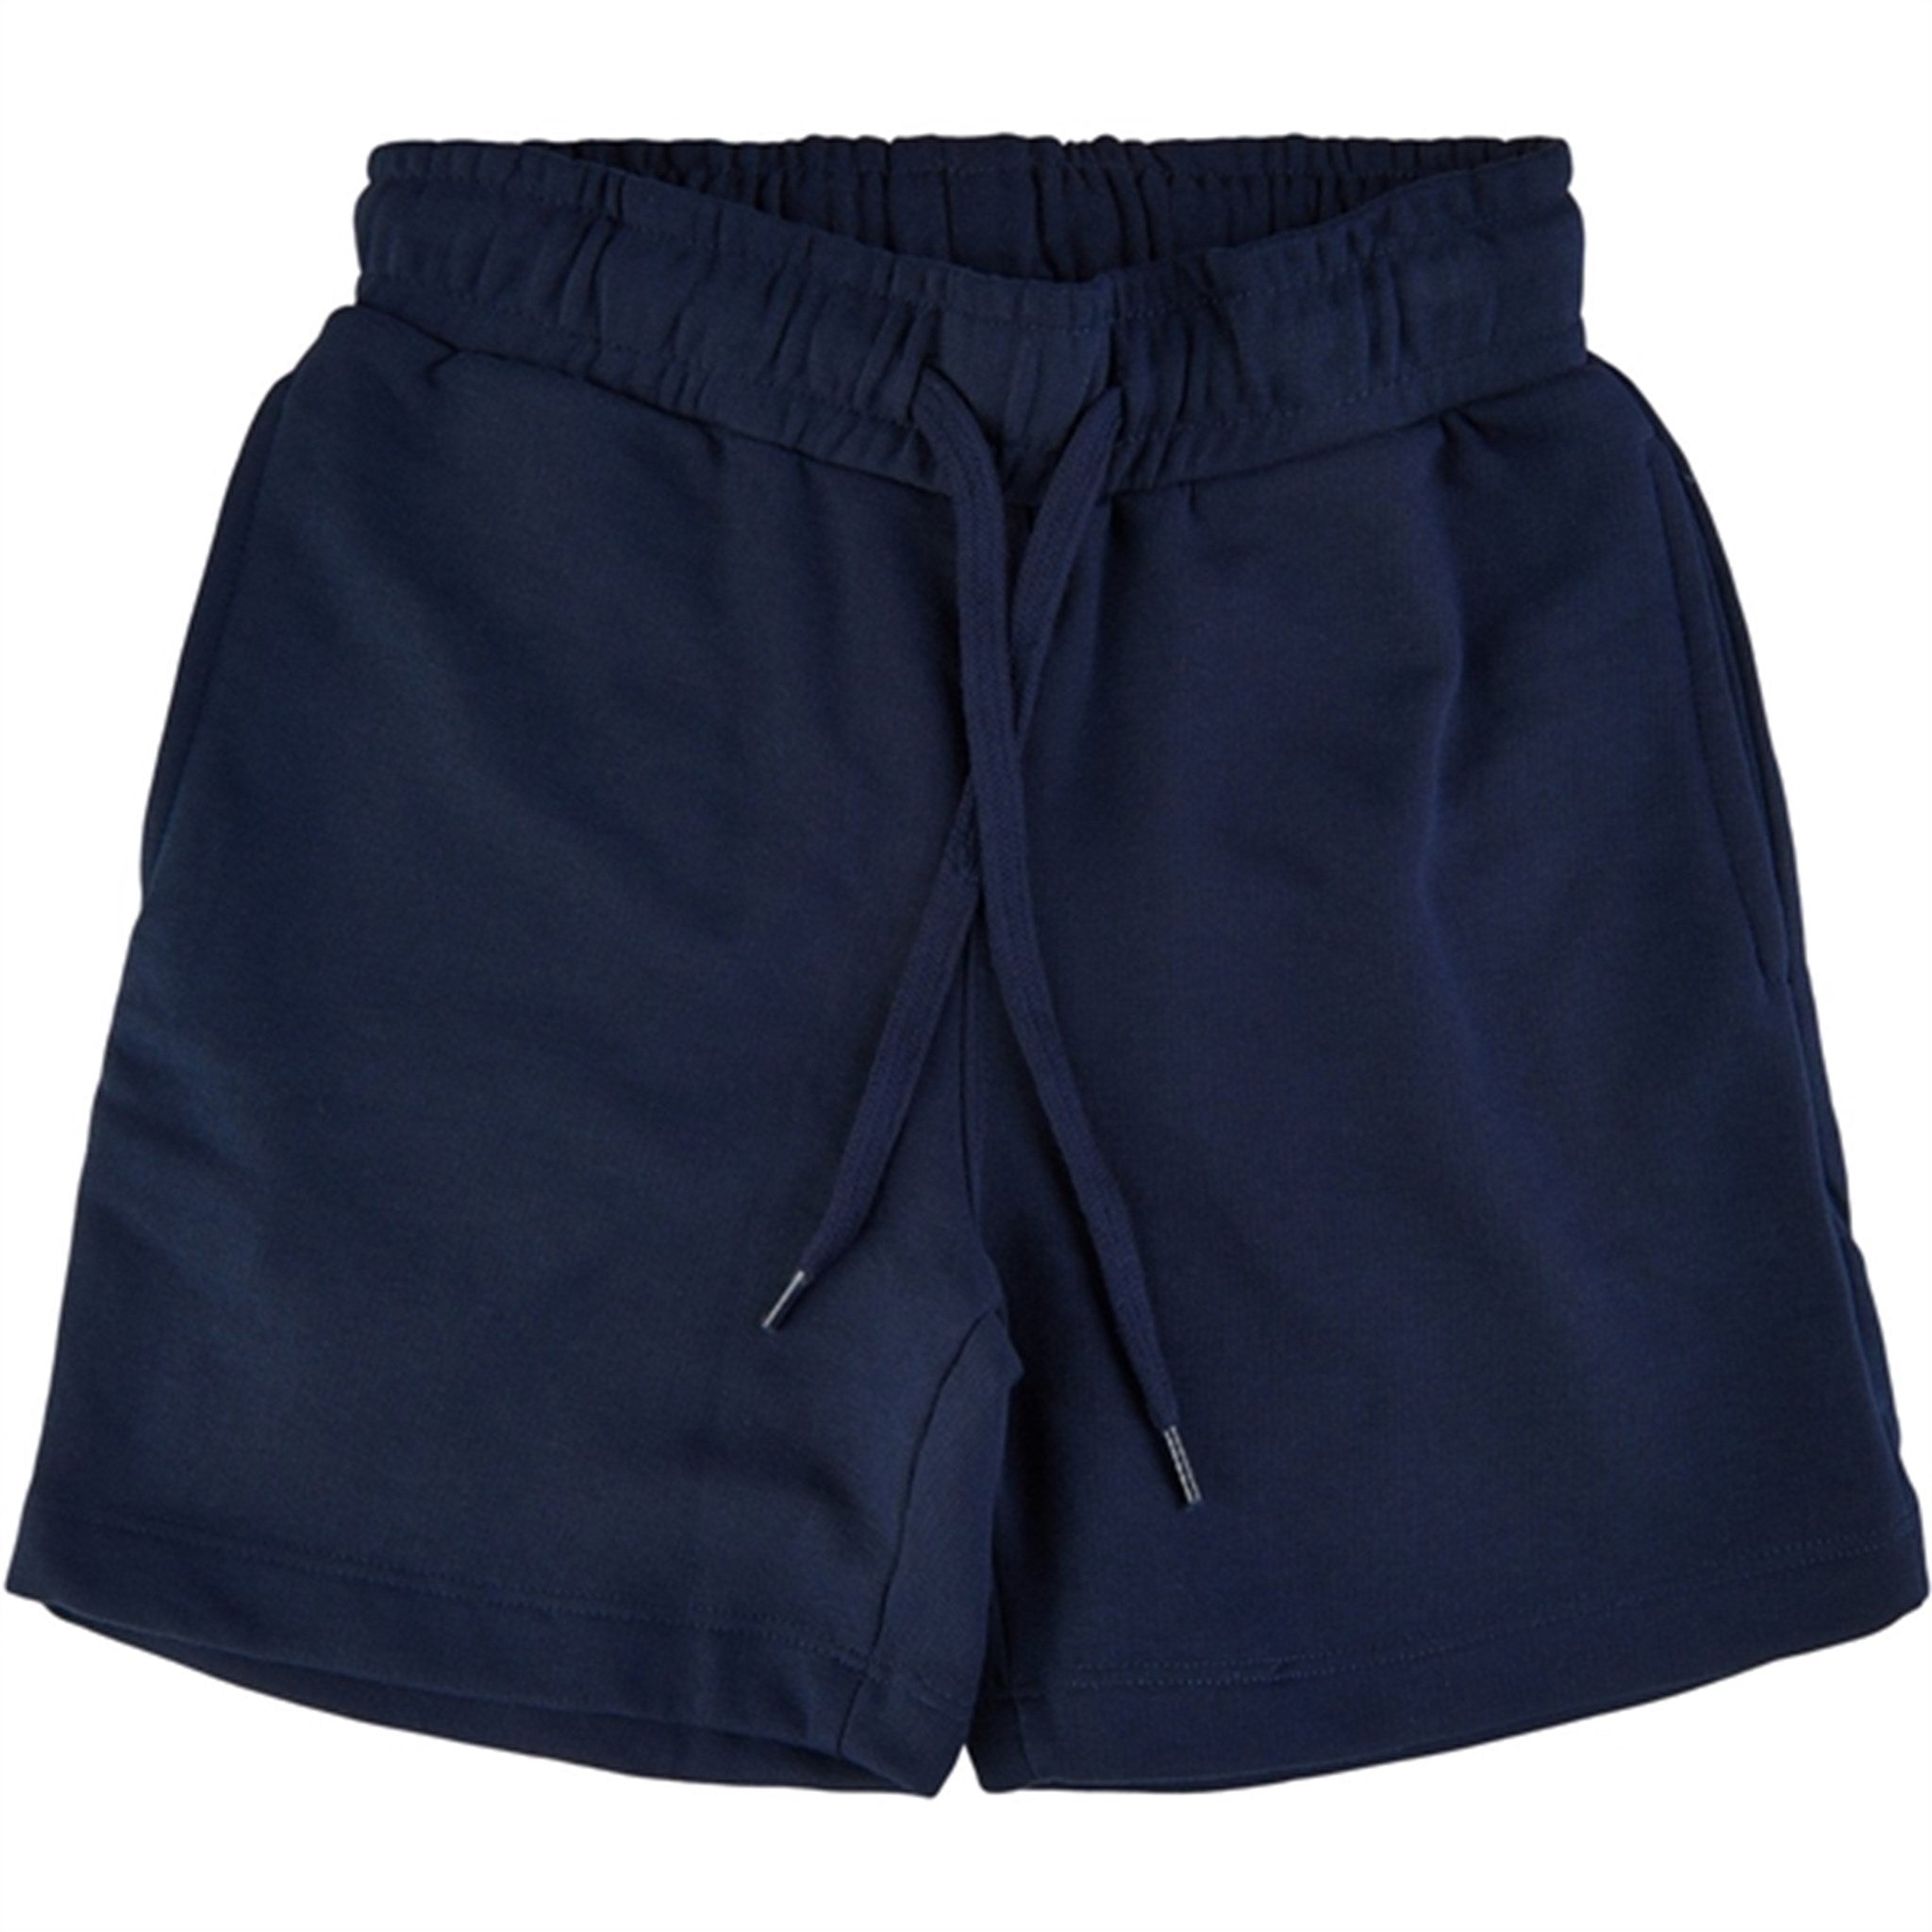 THE NEW Navy Blazer Gonzo Sweat Shorts